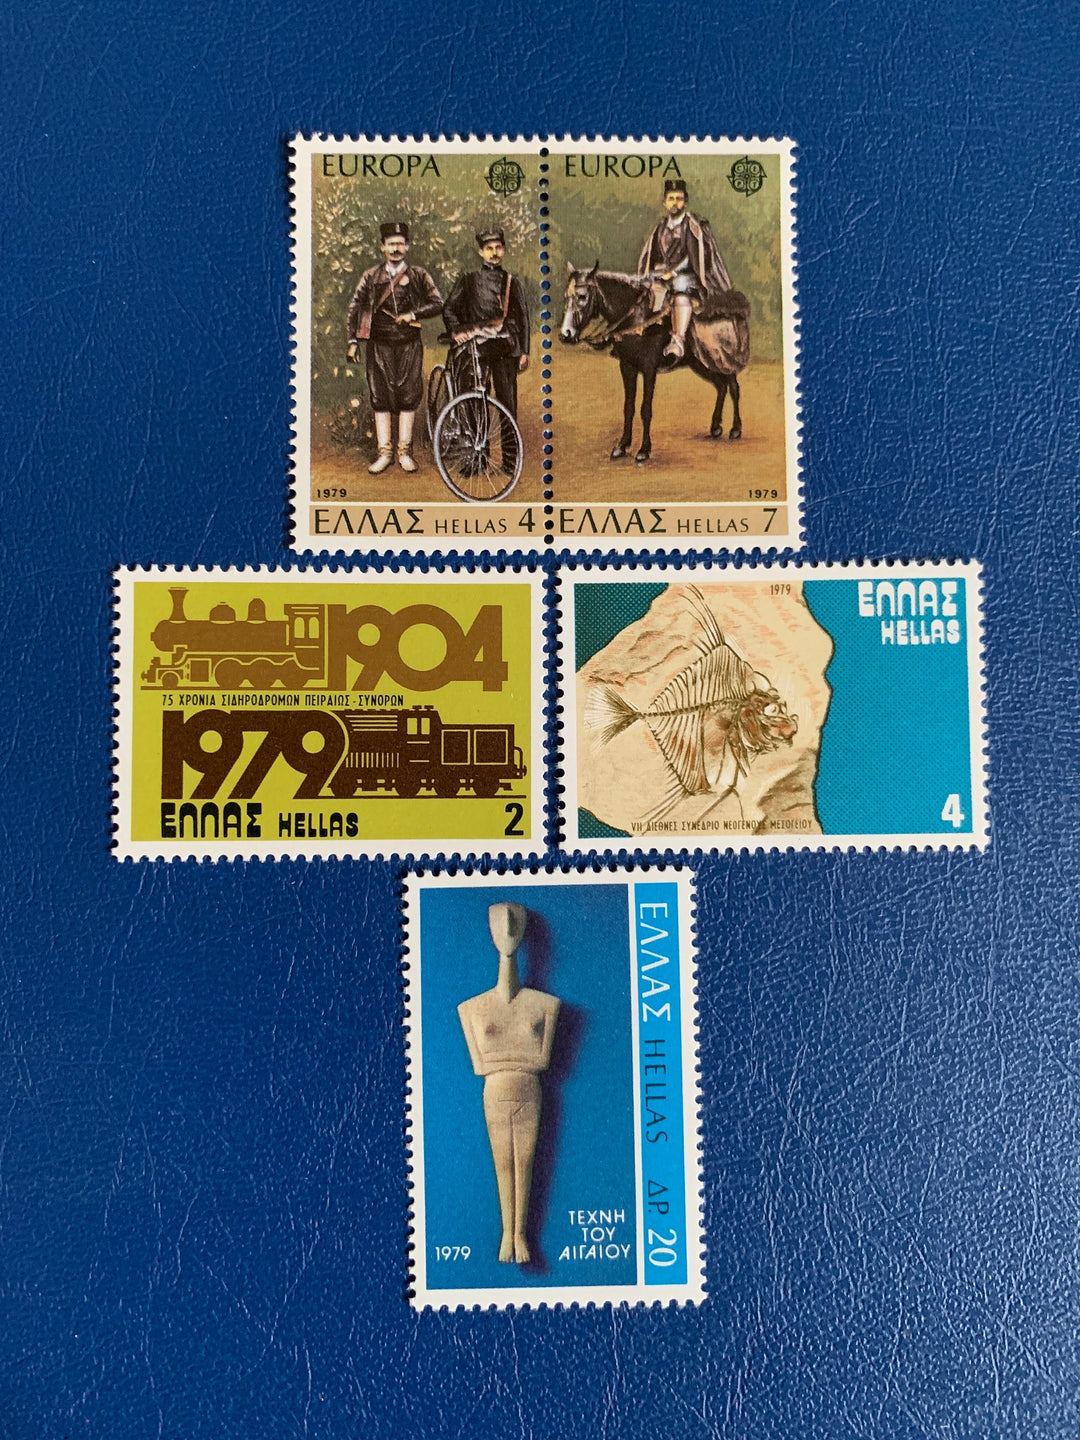 Greece - Original Vintage Postage Stamps- 1979 - Postal history, Piraeus/Frontier Railway, Neocene Fossil, Aegean Art